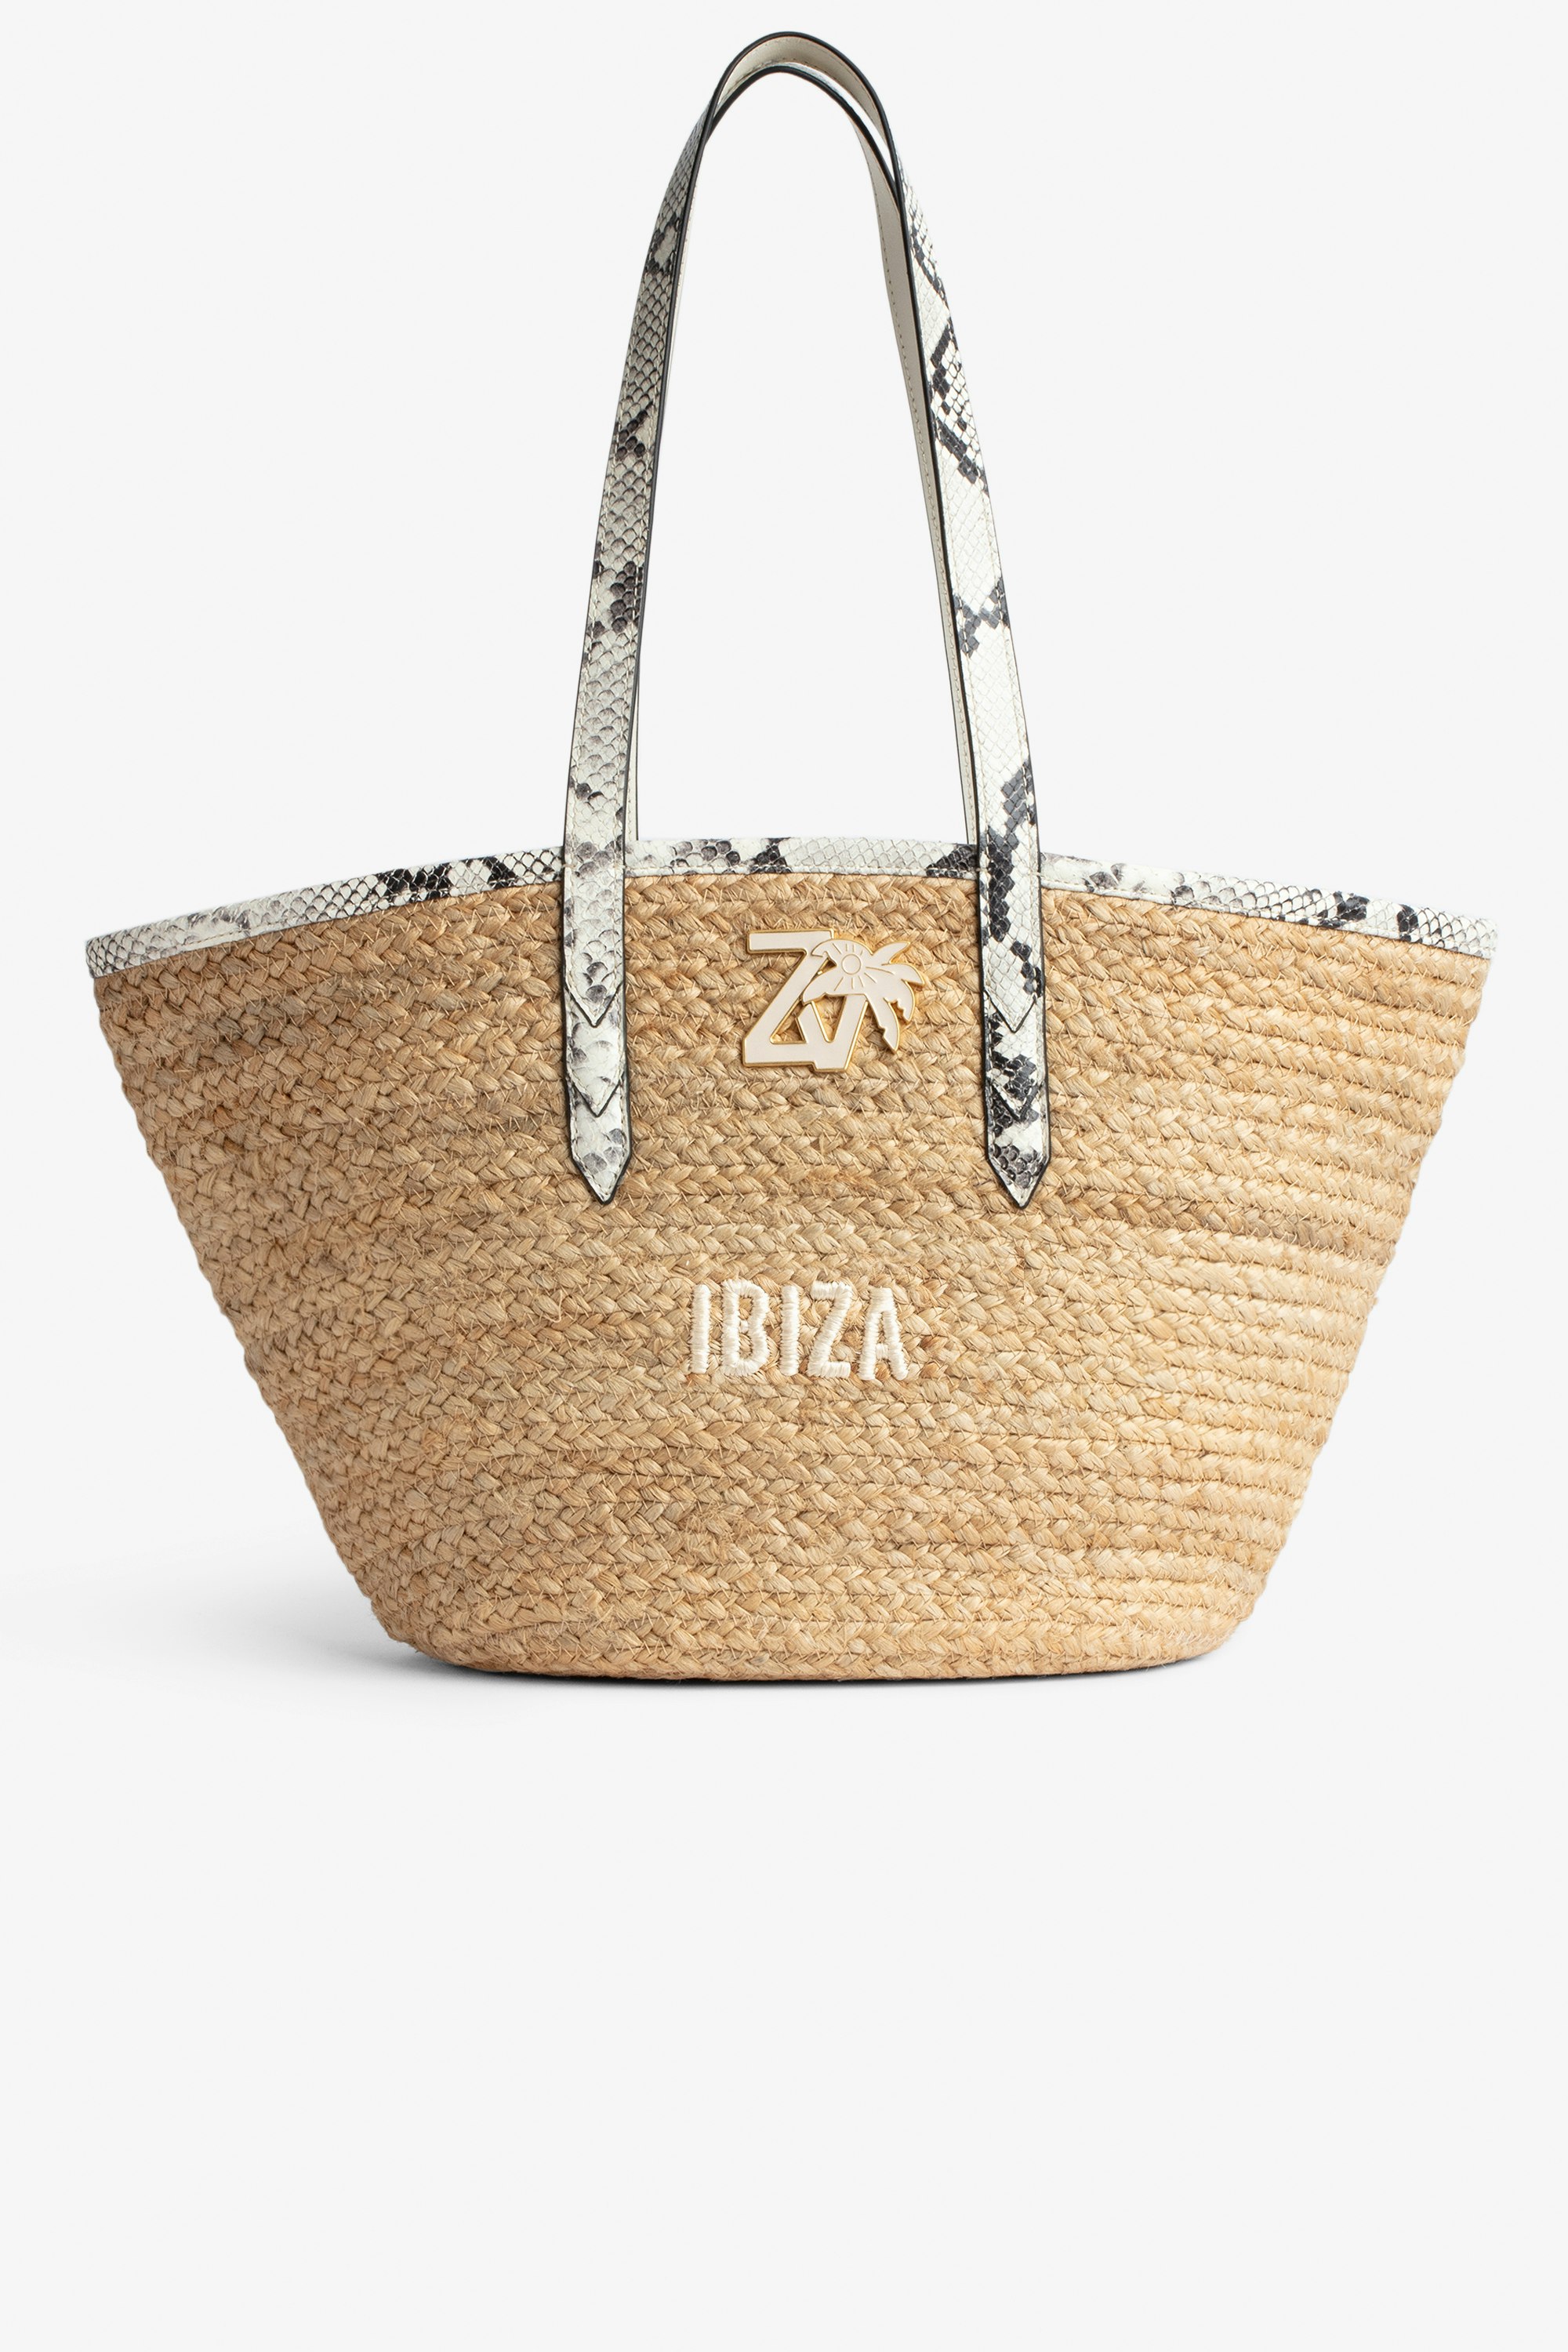 Bolso Le Beach Bag Bolso de paja con asas de cuero color crudo efecto pitón, bordado «Ibiza» y con colgante ZV Mujer